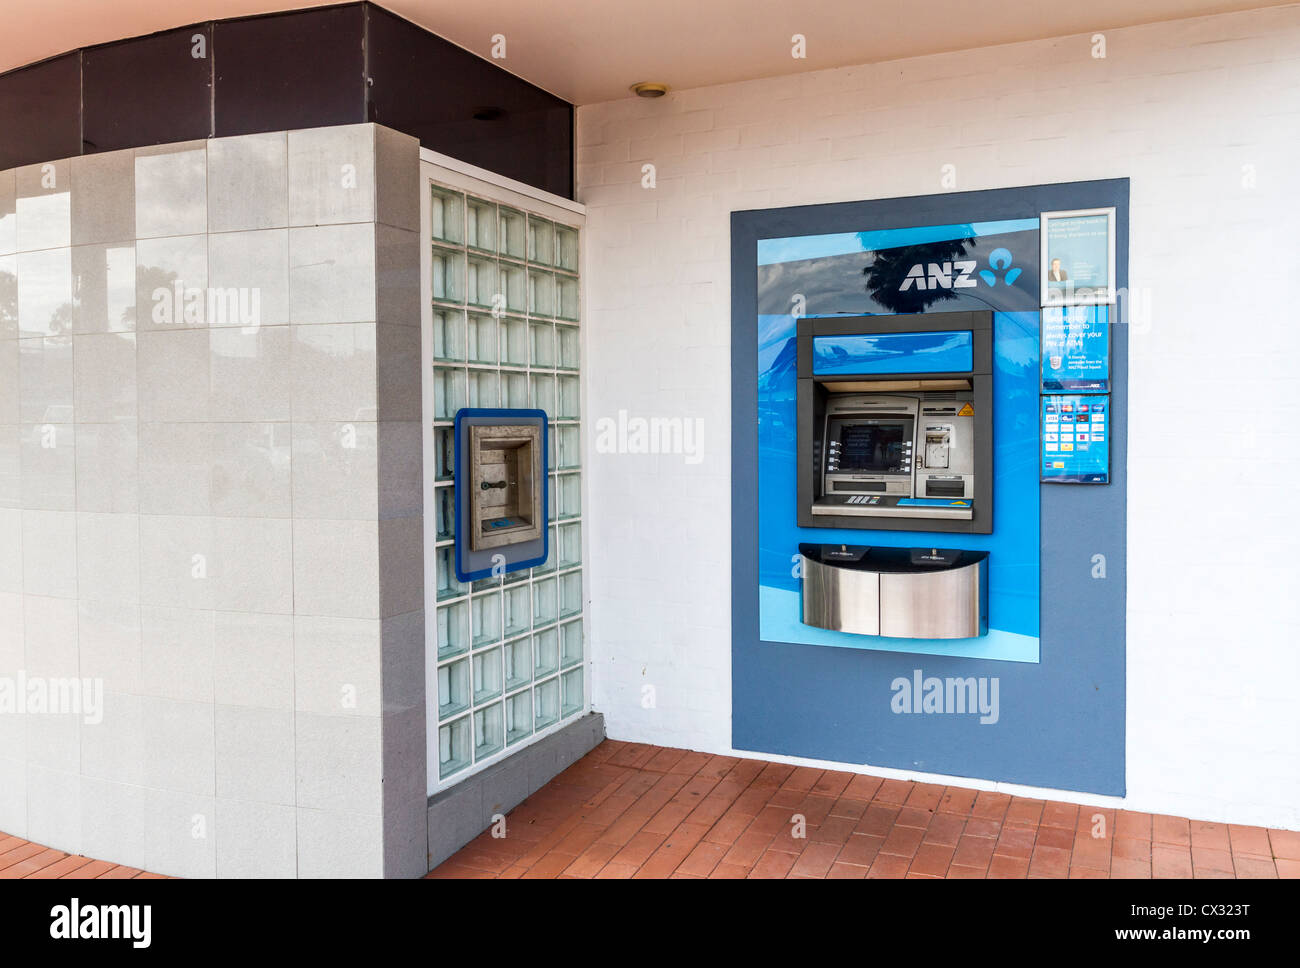 ATM Teller machine at ANZ Bank on Sunshine Coast, Queensland, Australia Stock Photo